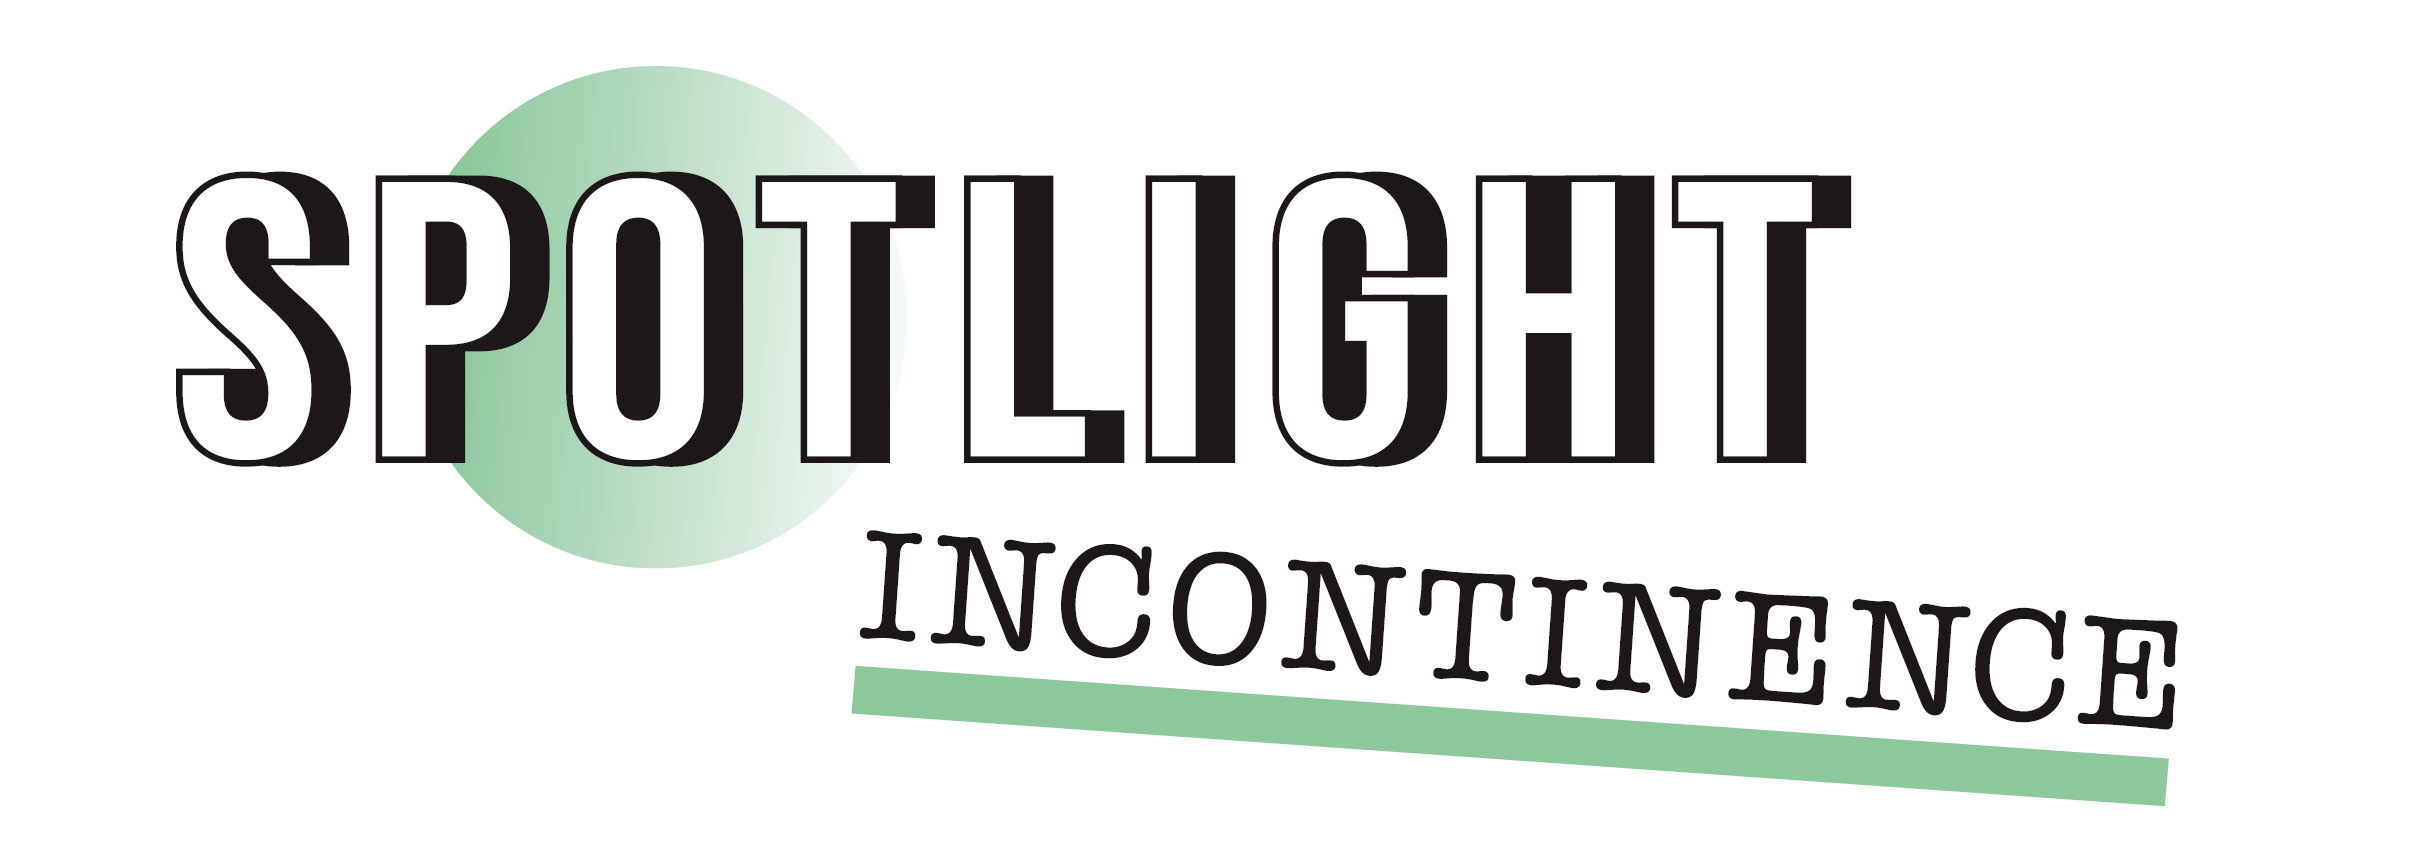 Spotlight-Incontinence-580x204.jpg